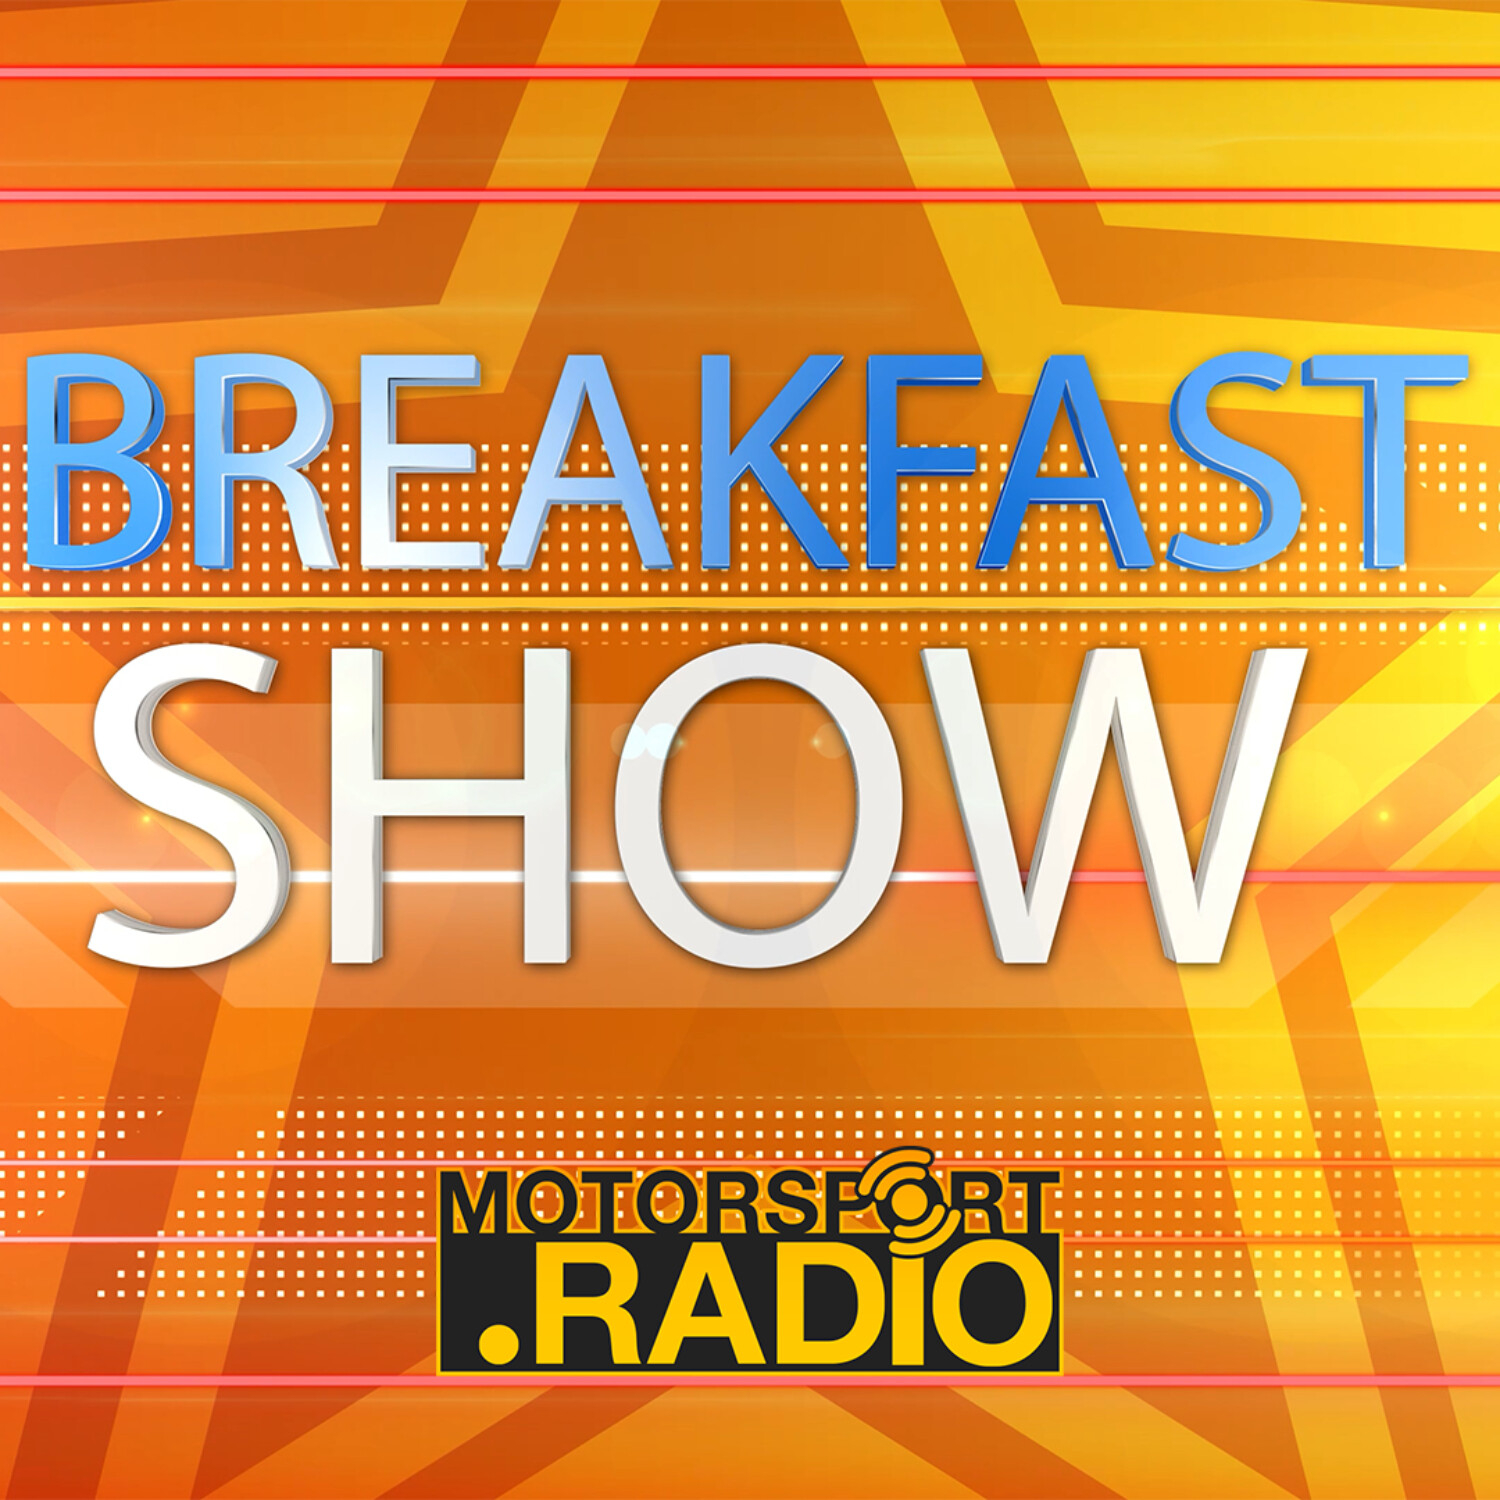 The Breakfast Show Mon to Fri 6-9am